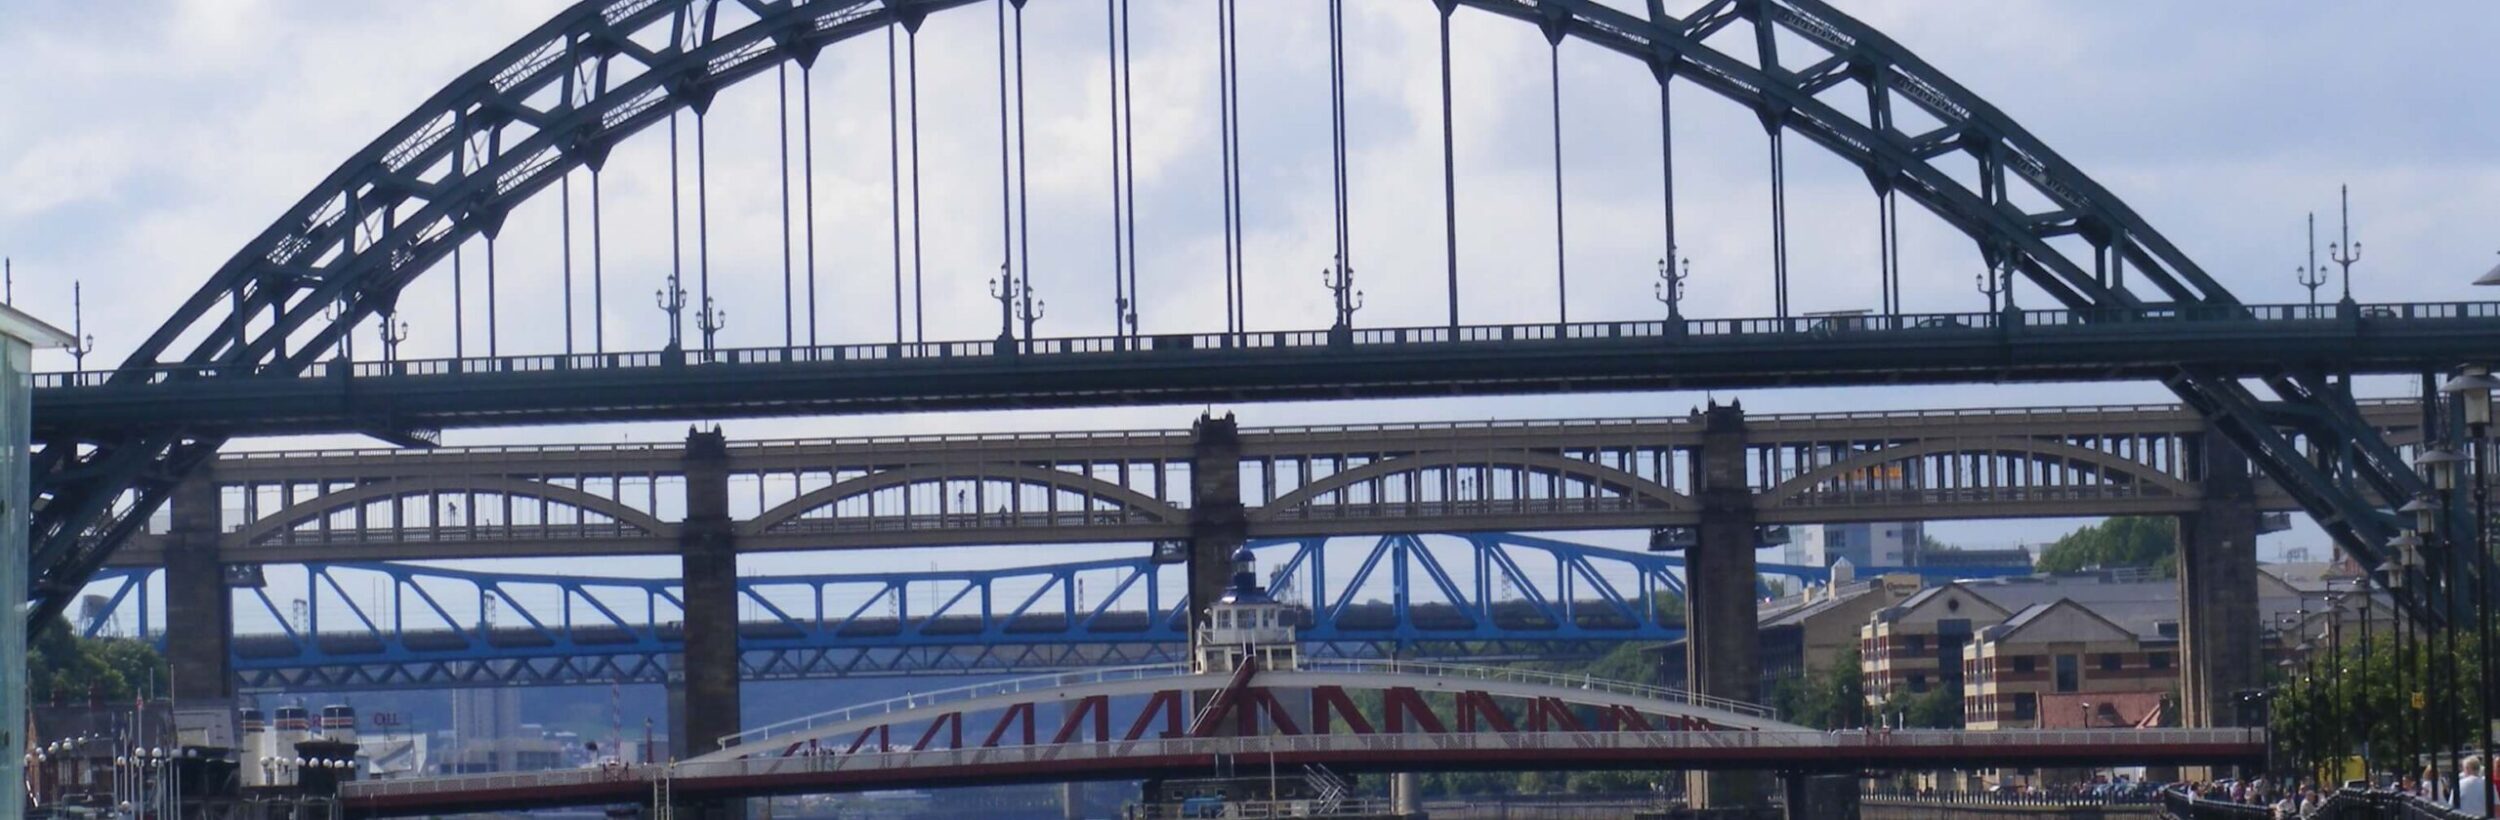 The Tyne Bridge at Newcastle Quayside